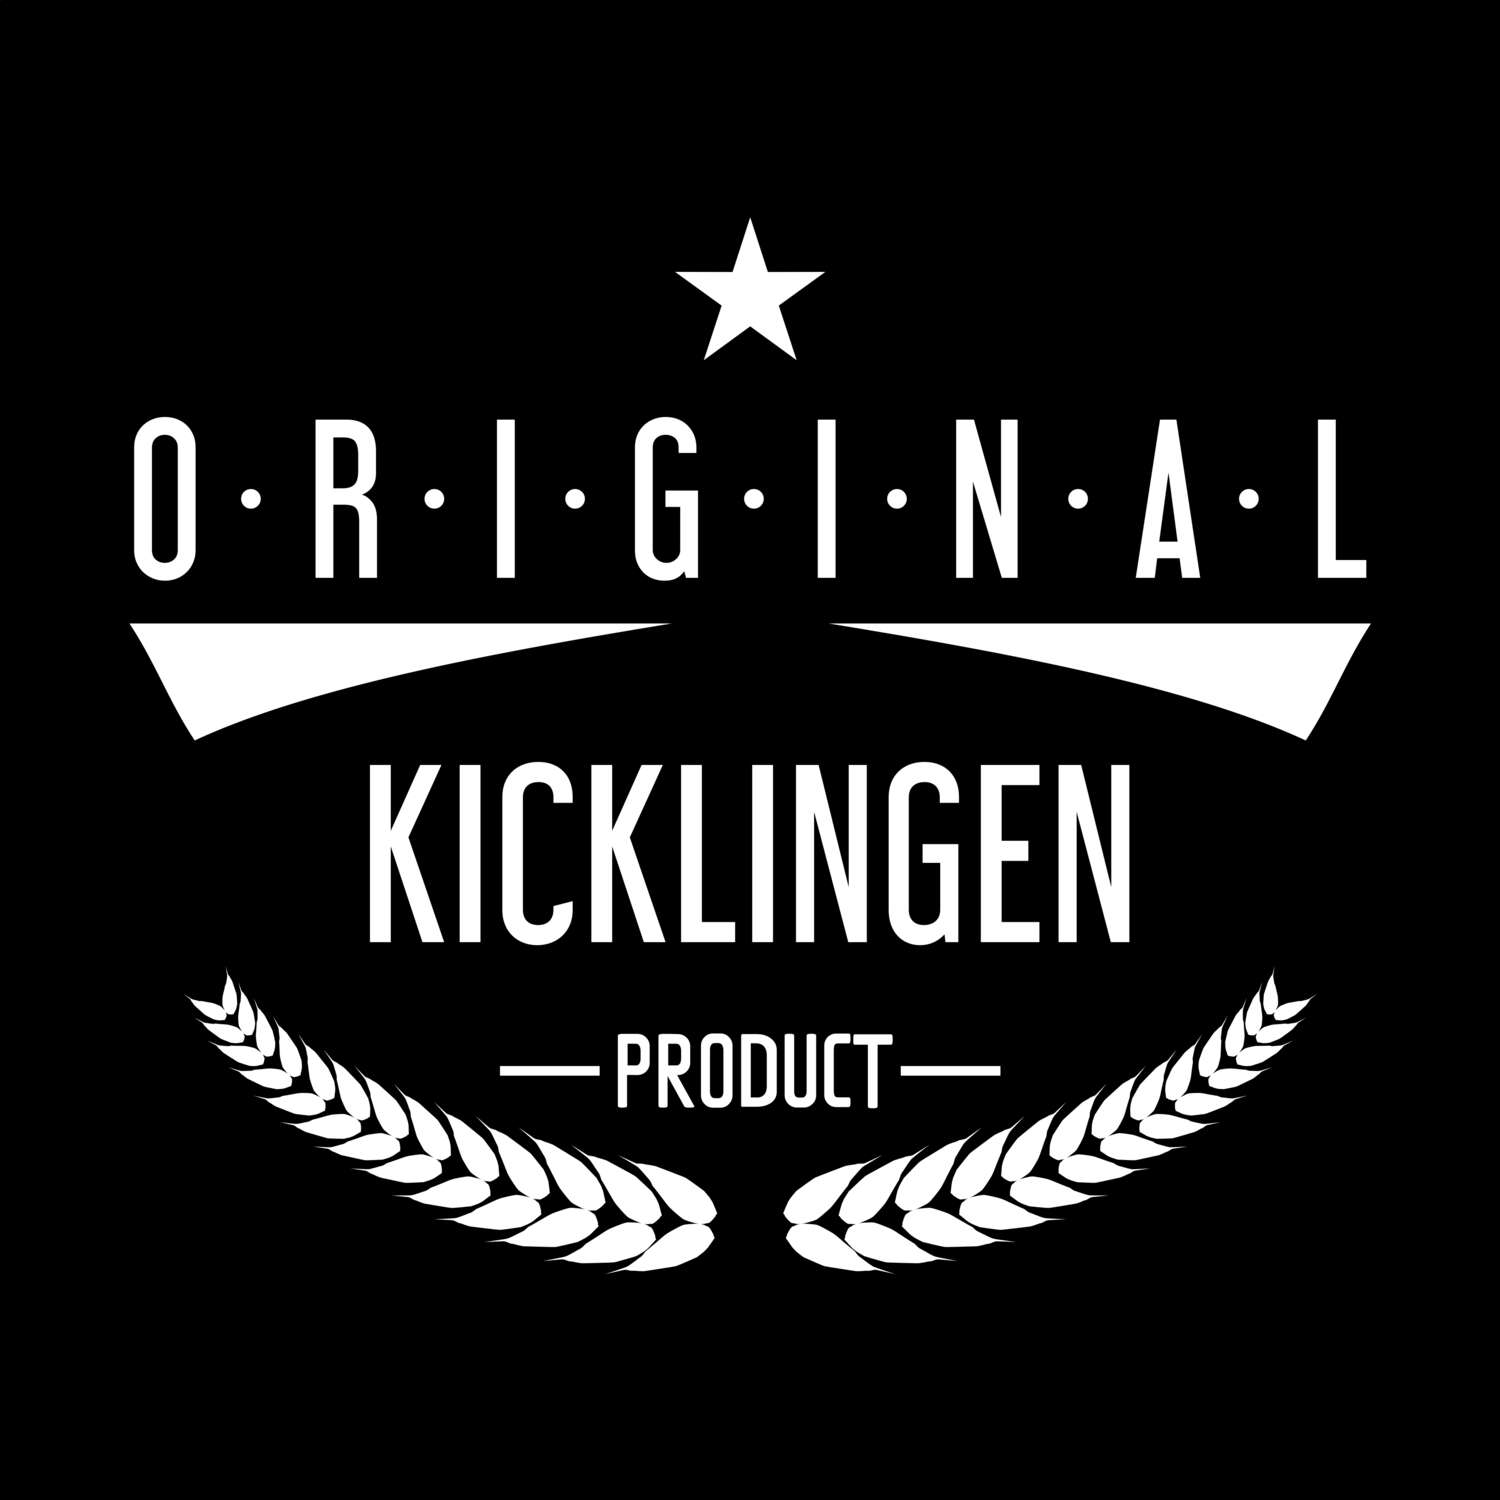 Kicklingen T-Shirt »Original Product«